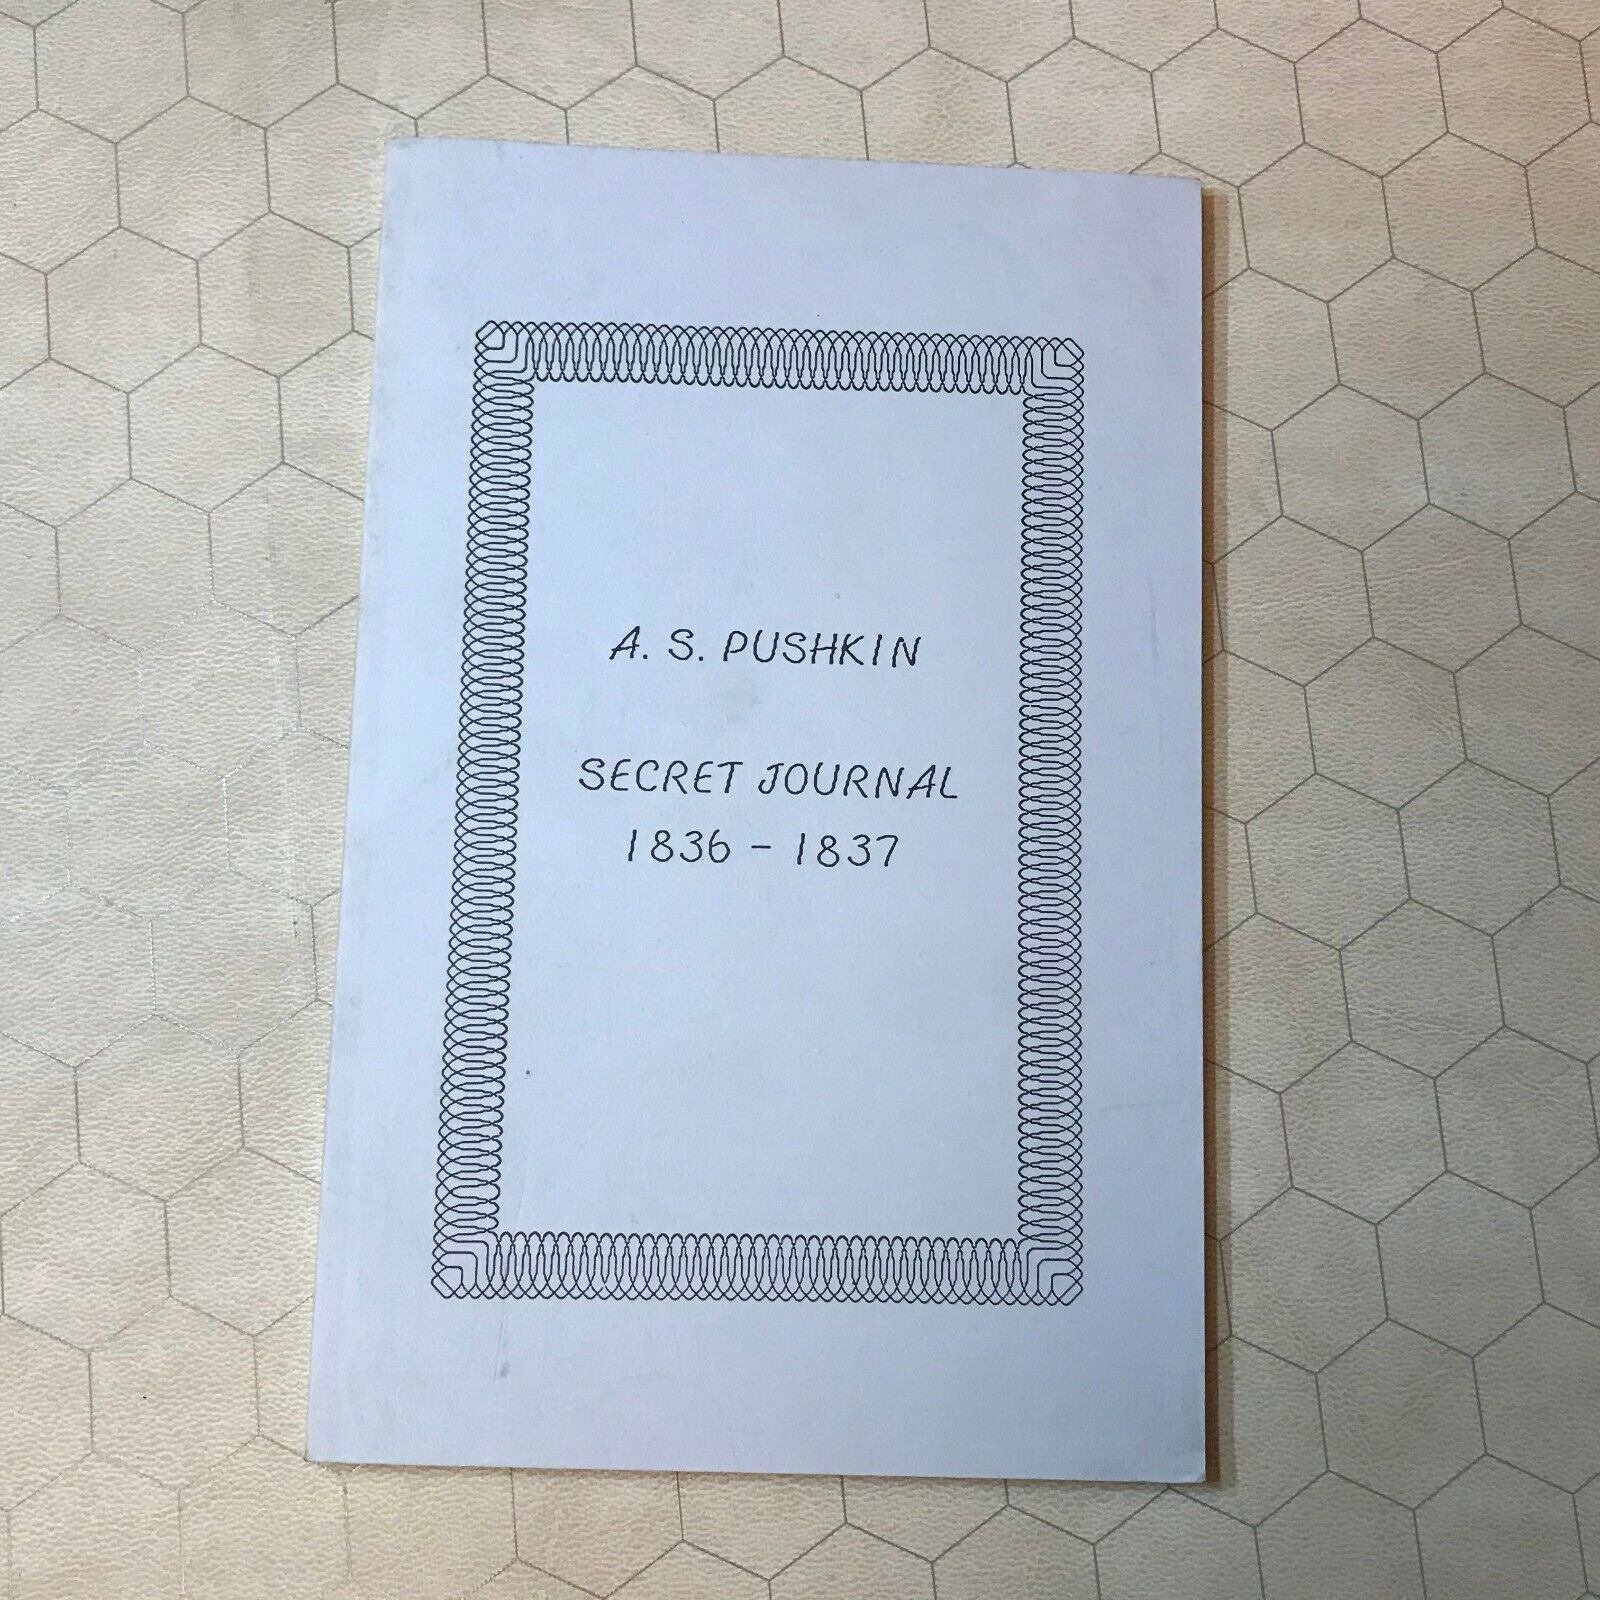 Secret Journal 1836-1837 by Alexander Pushkin pb 1996 paperback 5th pr MIP rare! Без бренда